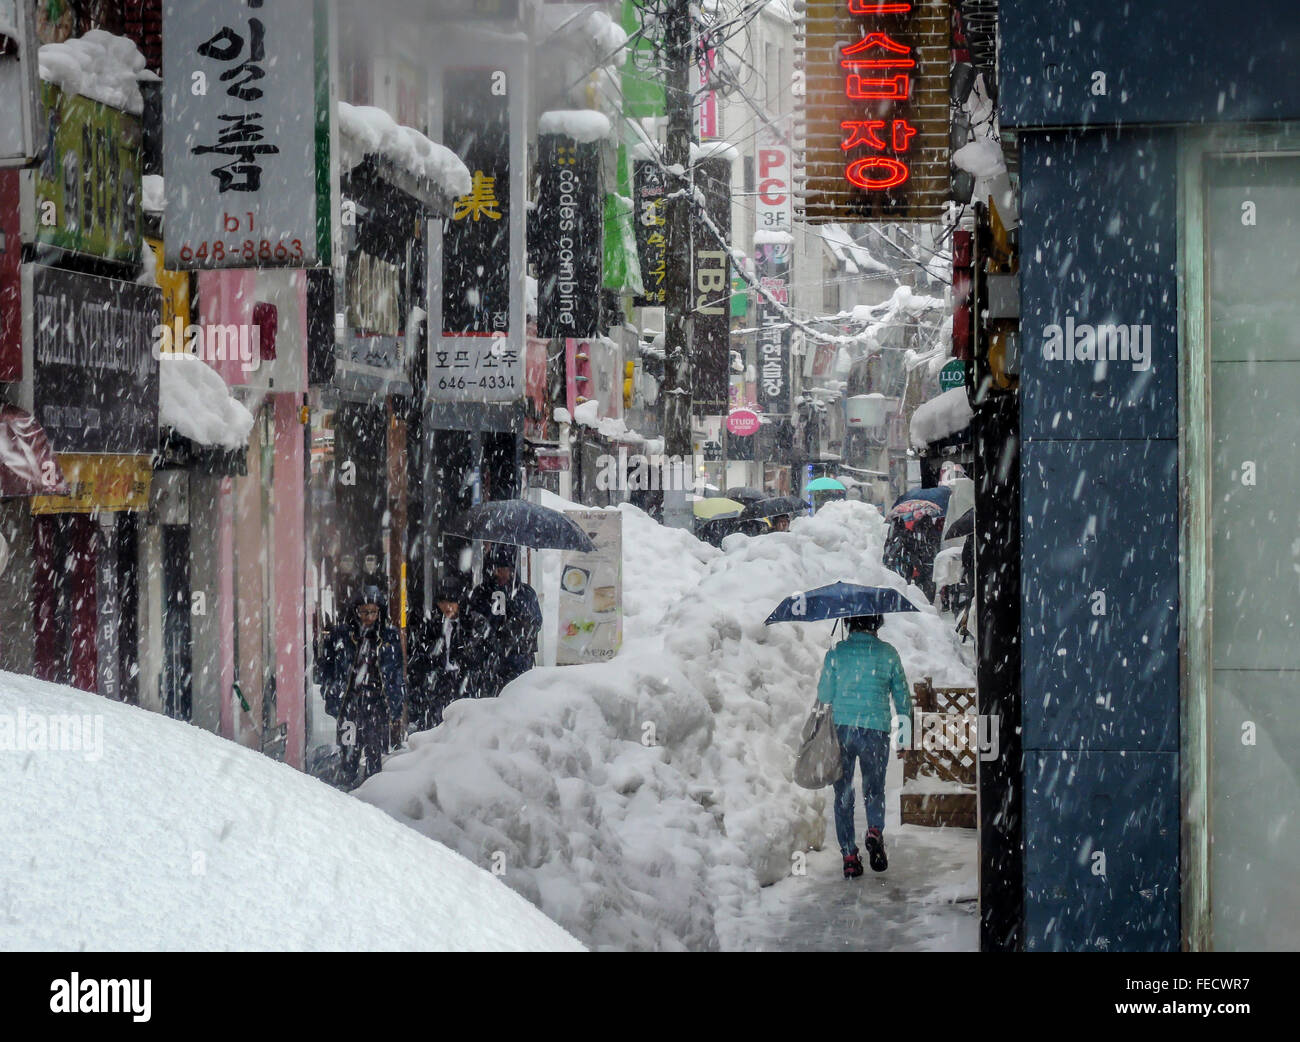 Neve pesante con neve alta impilati in una città coreana Foto Stock